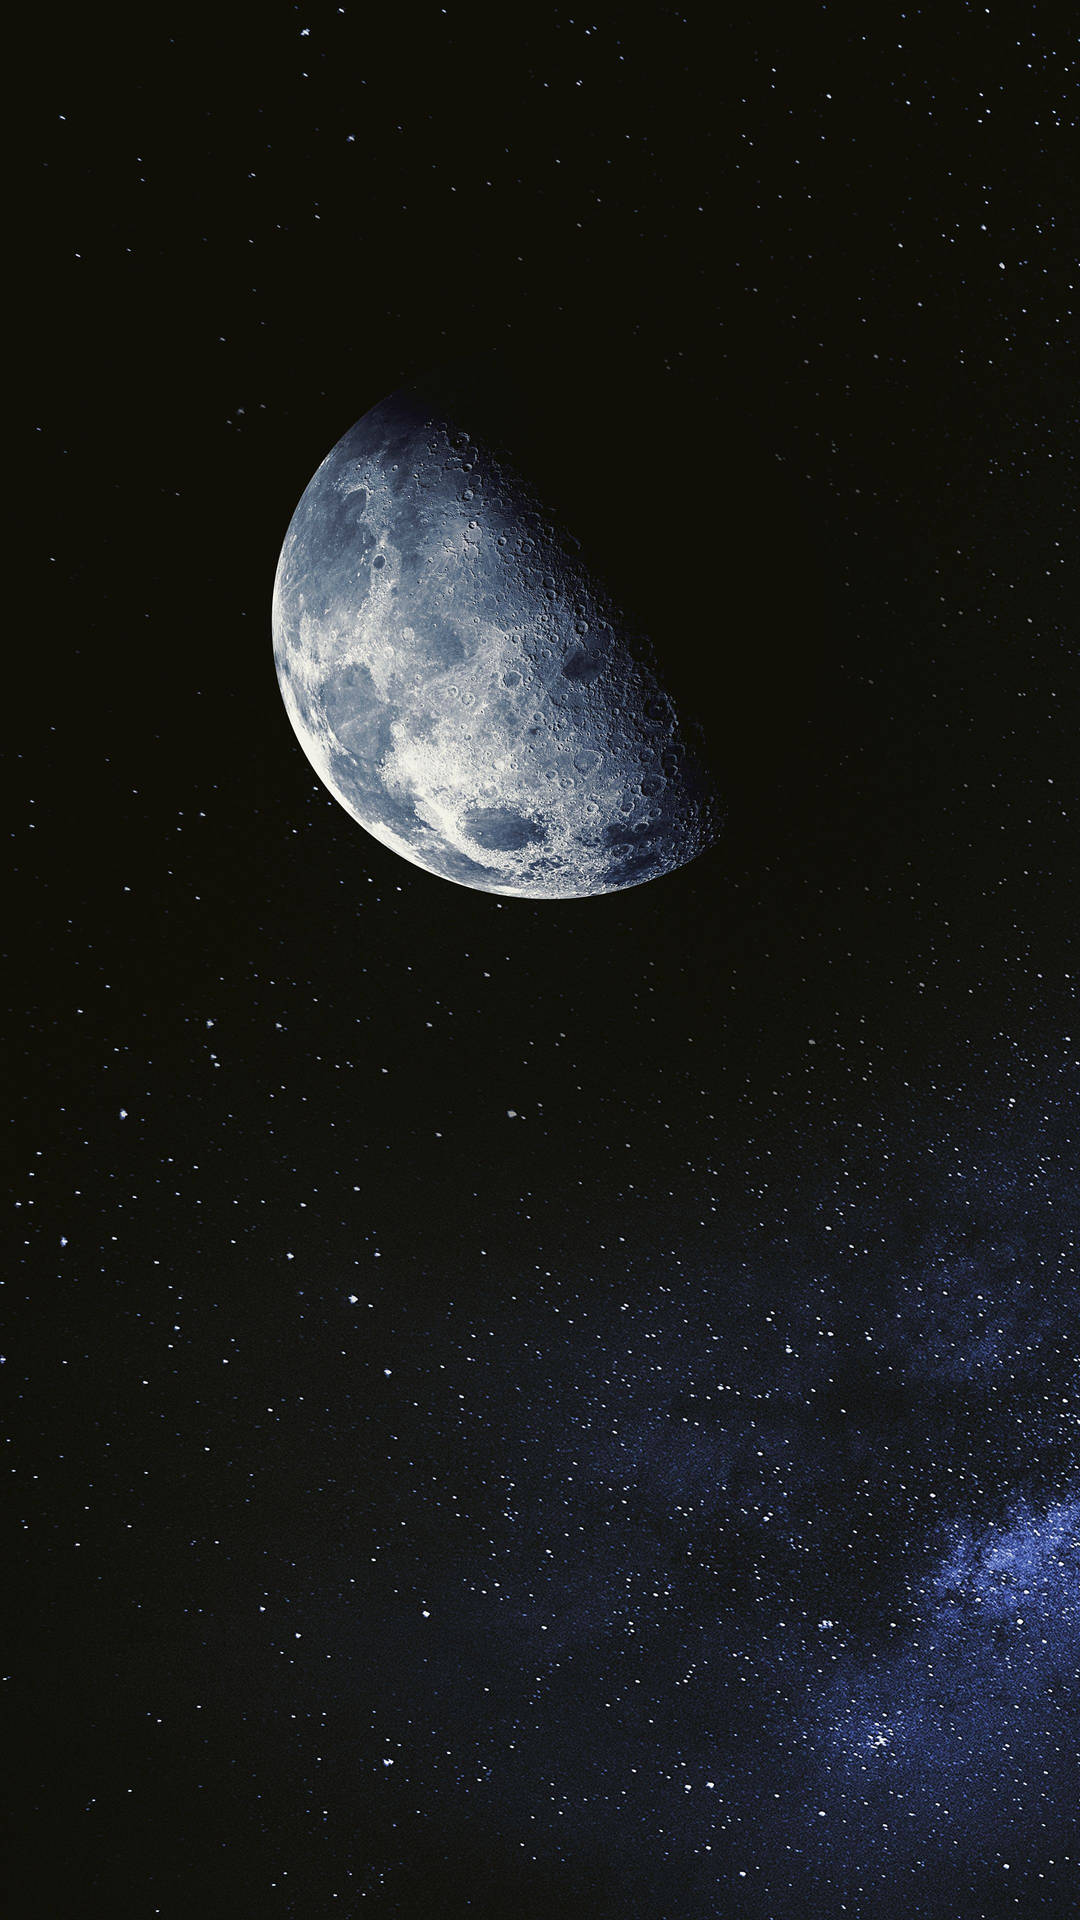 Enigmatic Half Moon Shining In The Dark Sky - 4k Ultra Hd Wallpaper For Phones